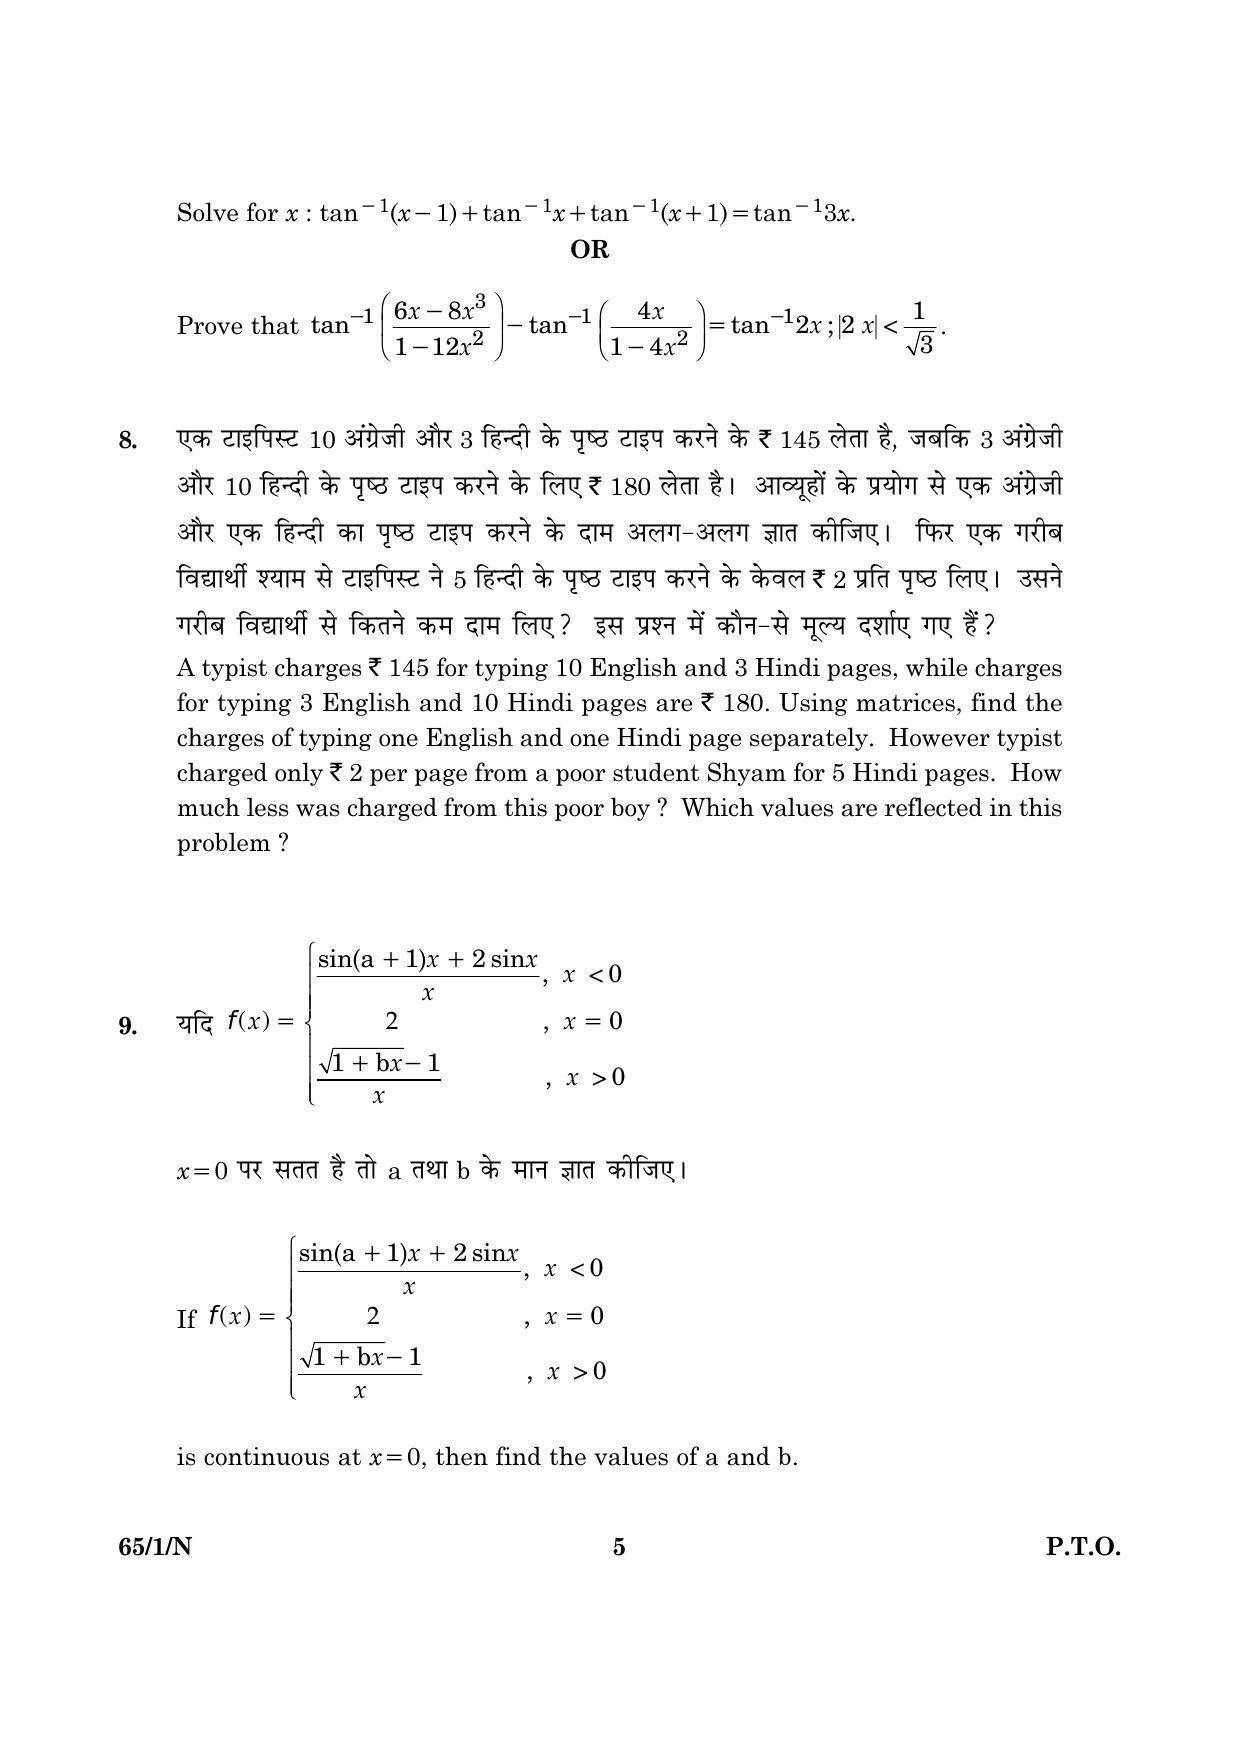 CBSE Class 12 065 Set 1 N Mathematics 2016 Question Paper - Page 5